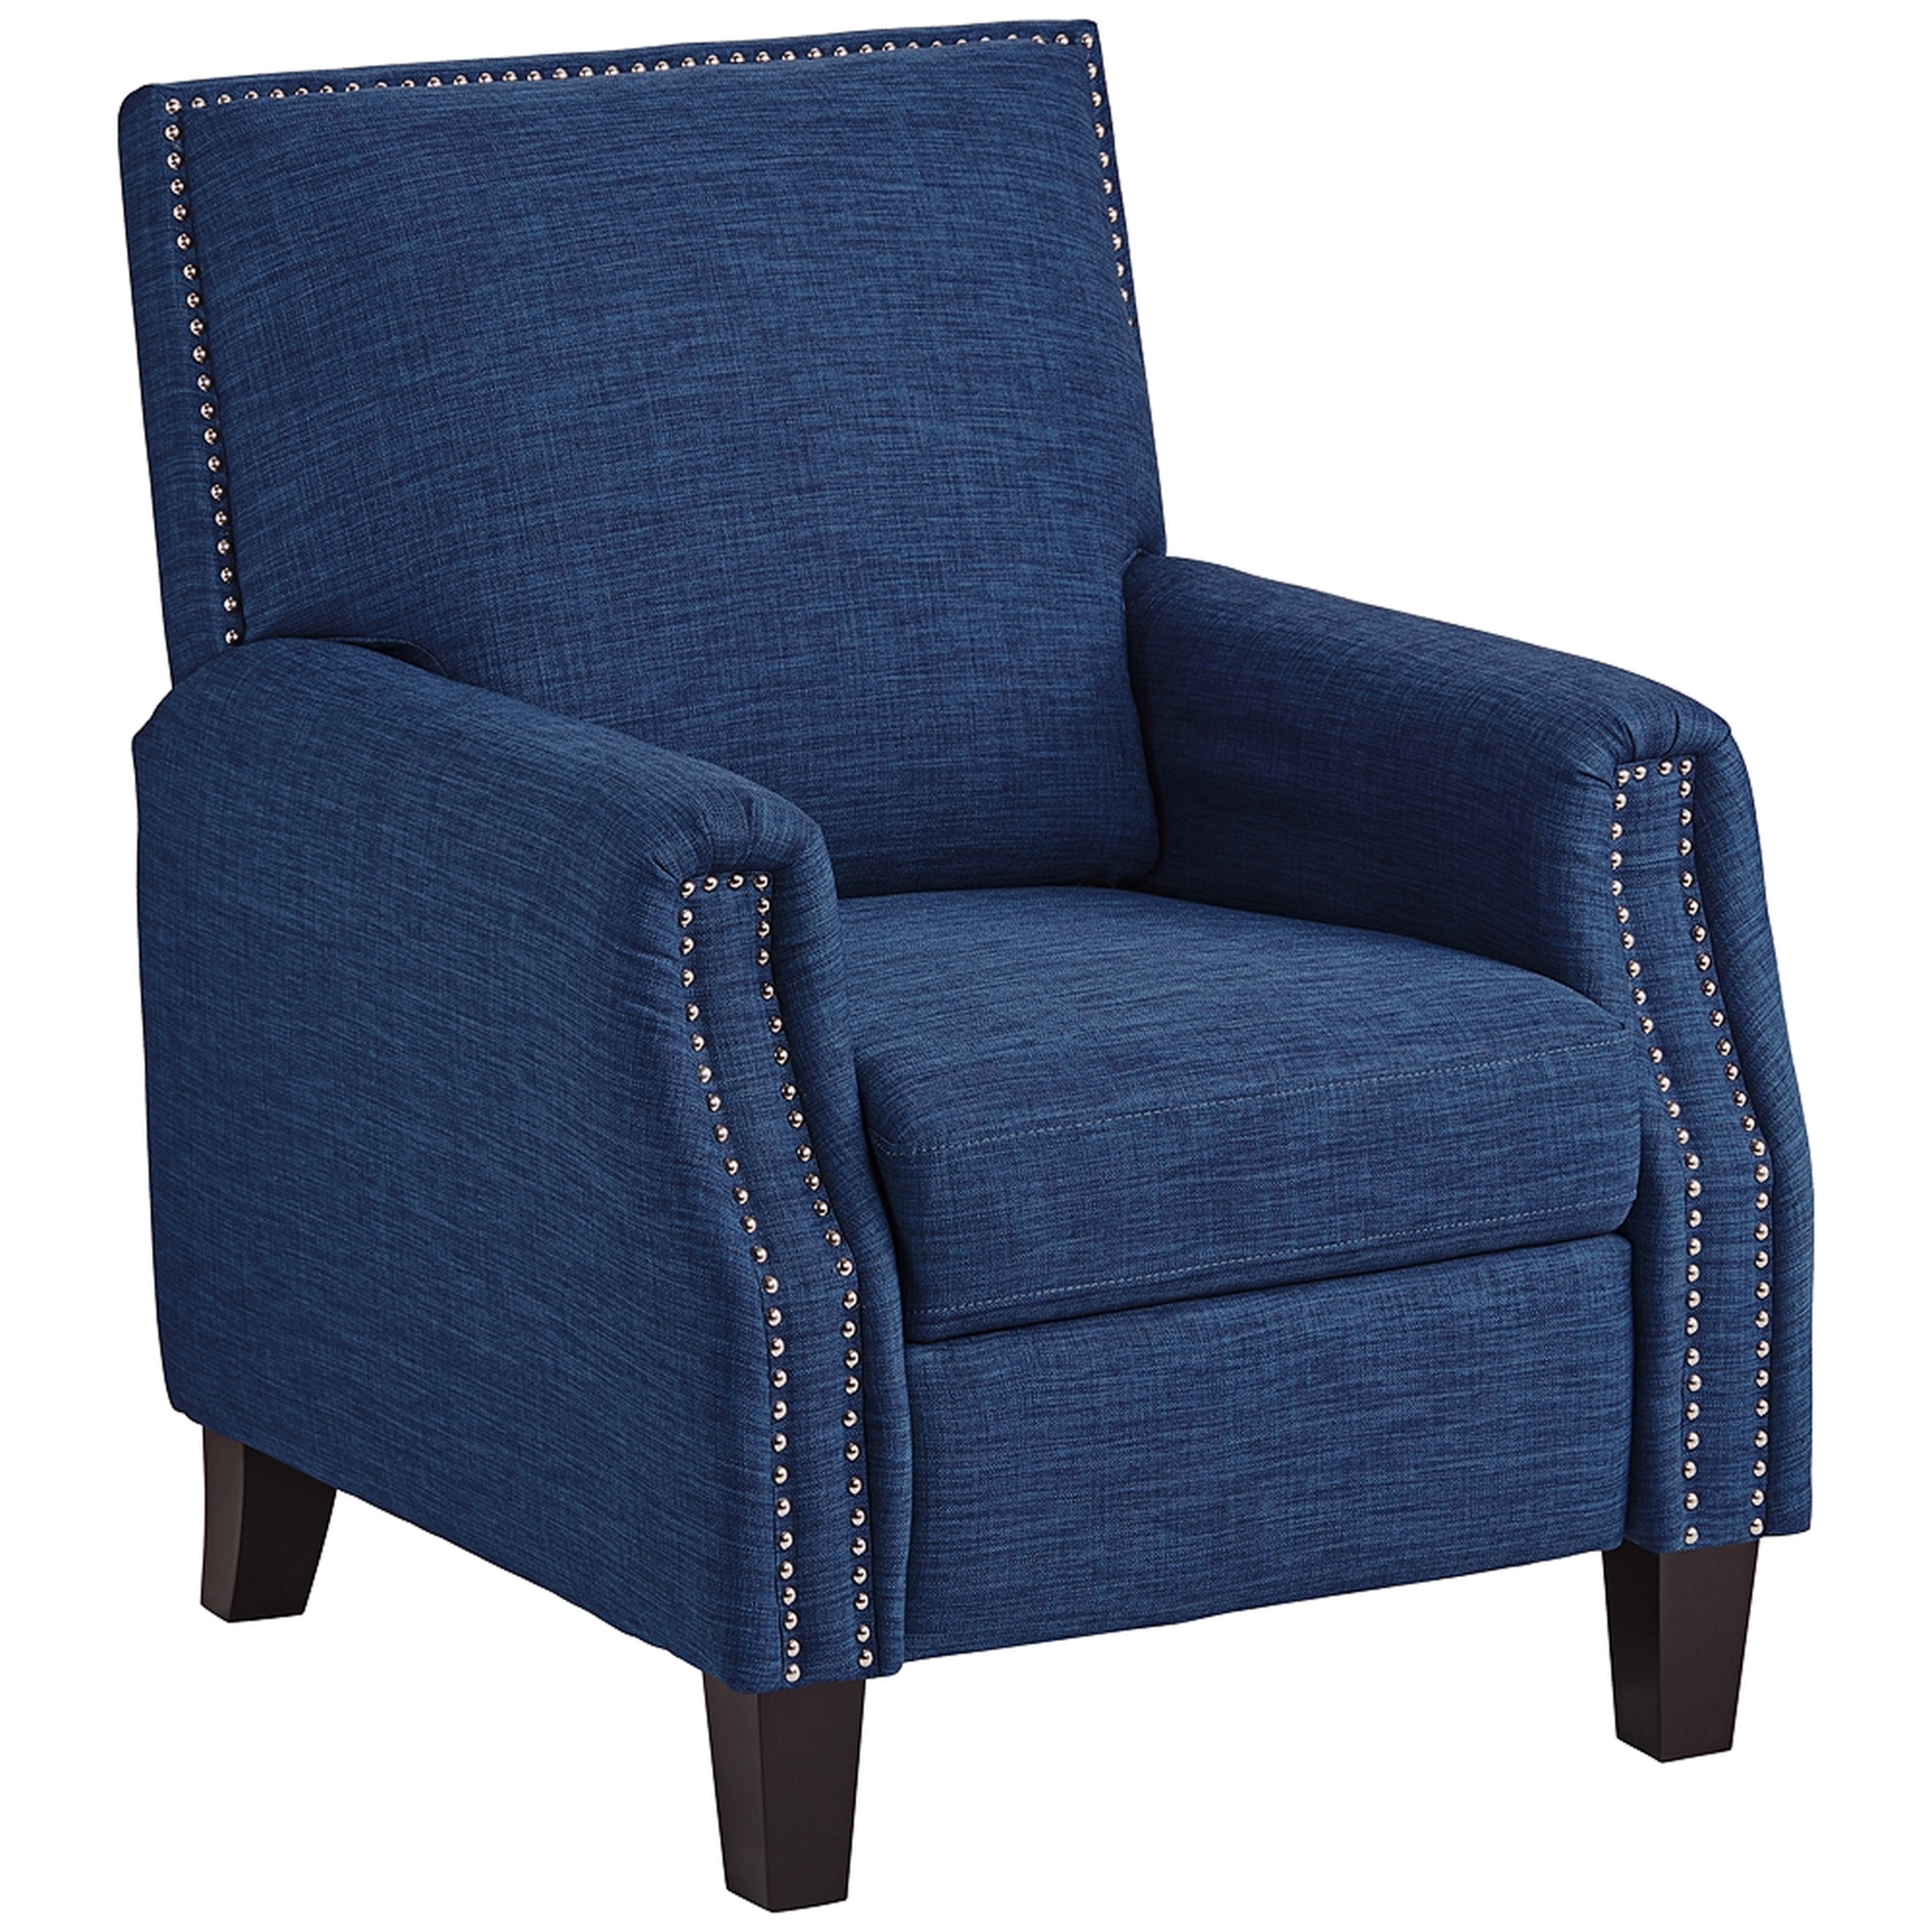 Romeo Heirloom Blue 3-Way Recliner Chair - Style # 23N57 - Lamps Plus